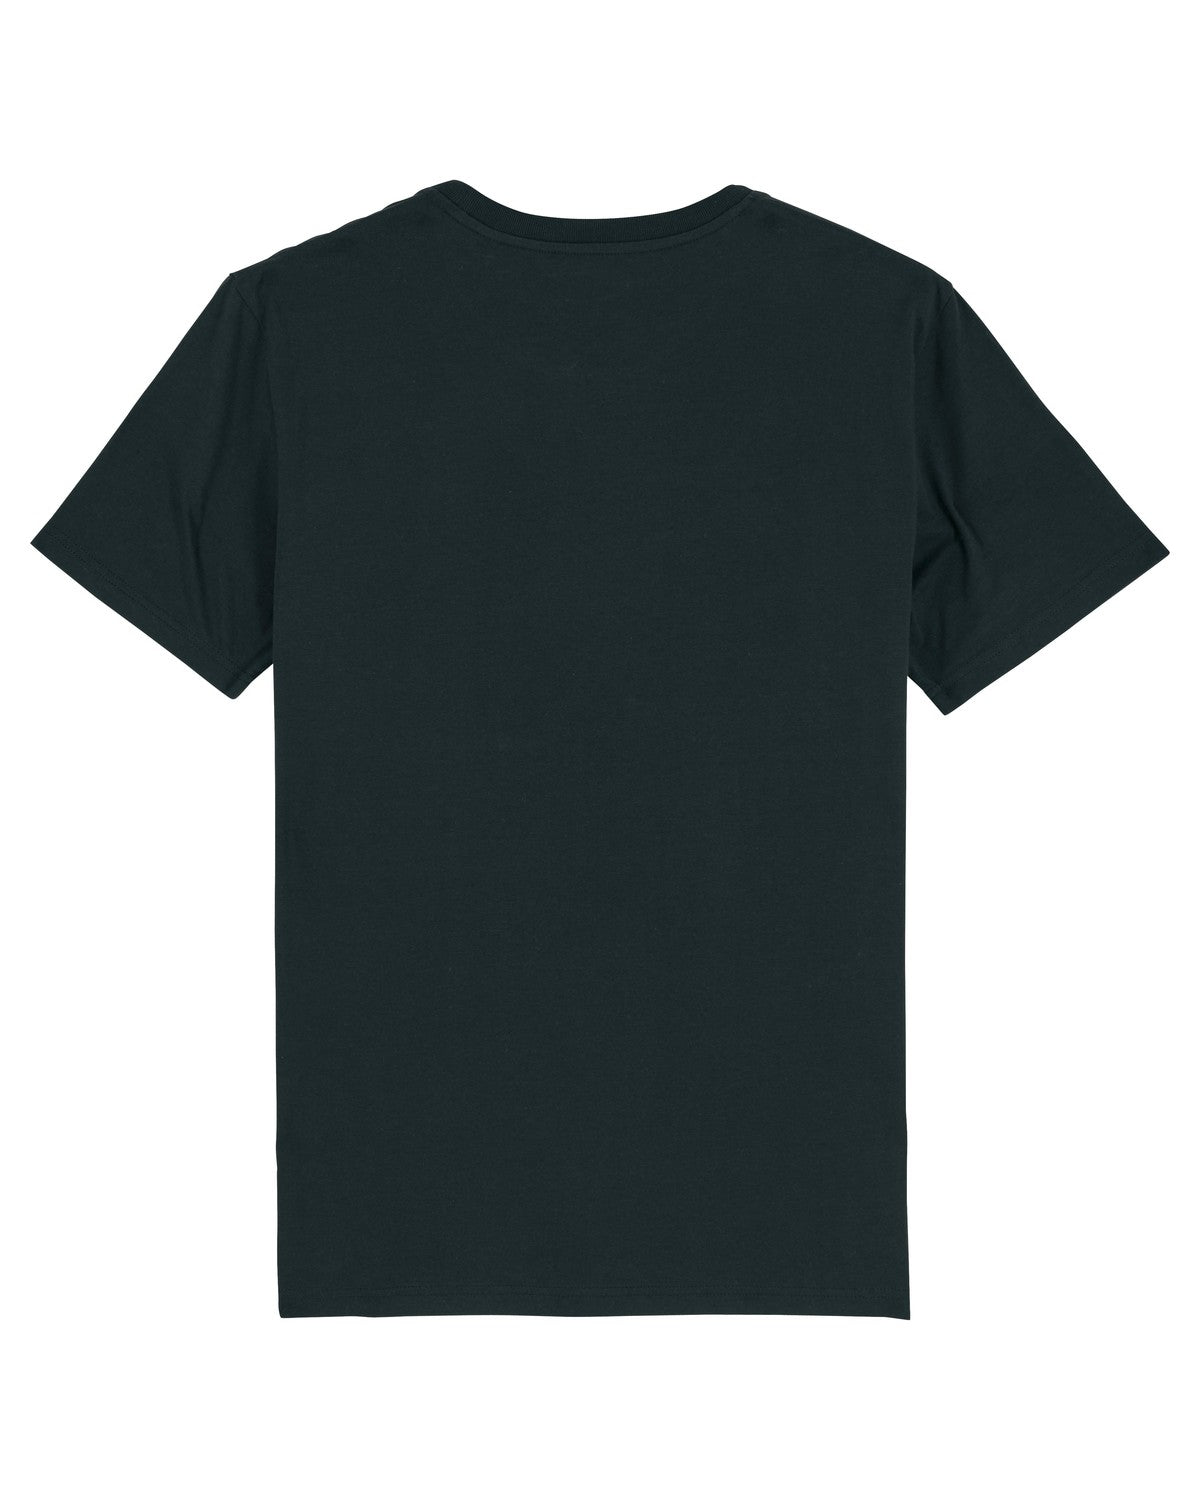 T shirt Astroworld Multicolor Black